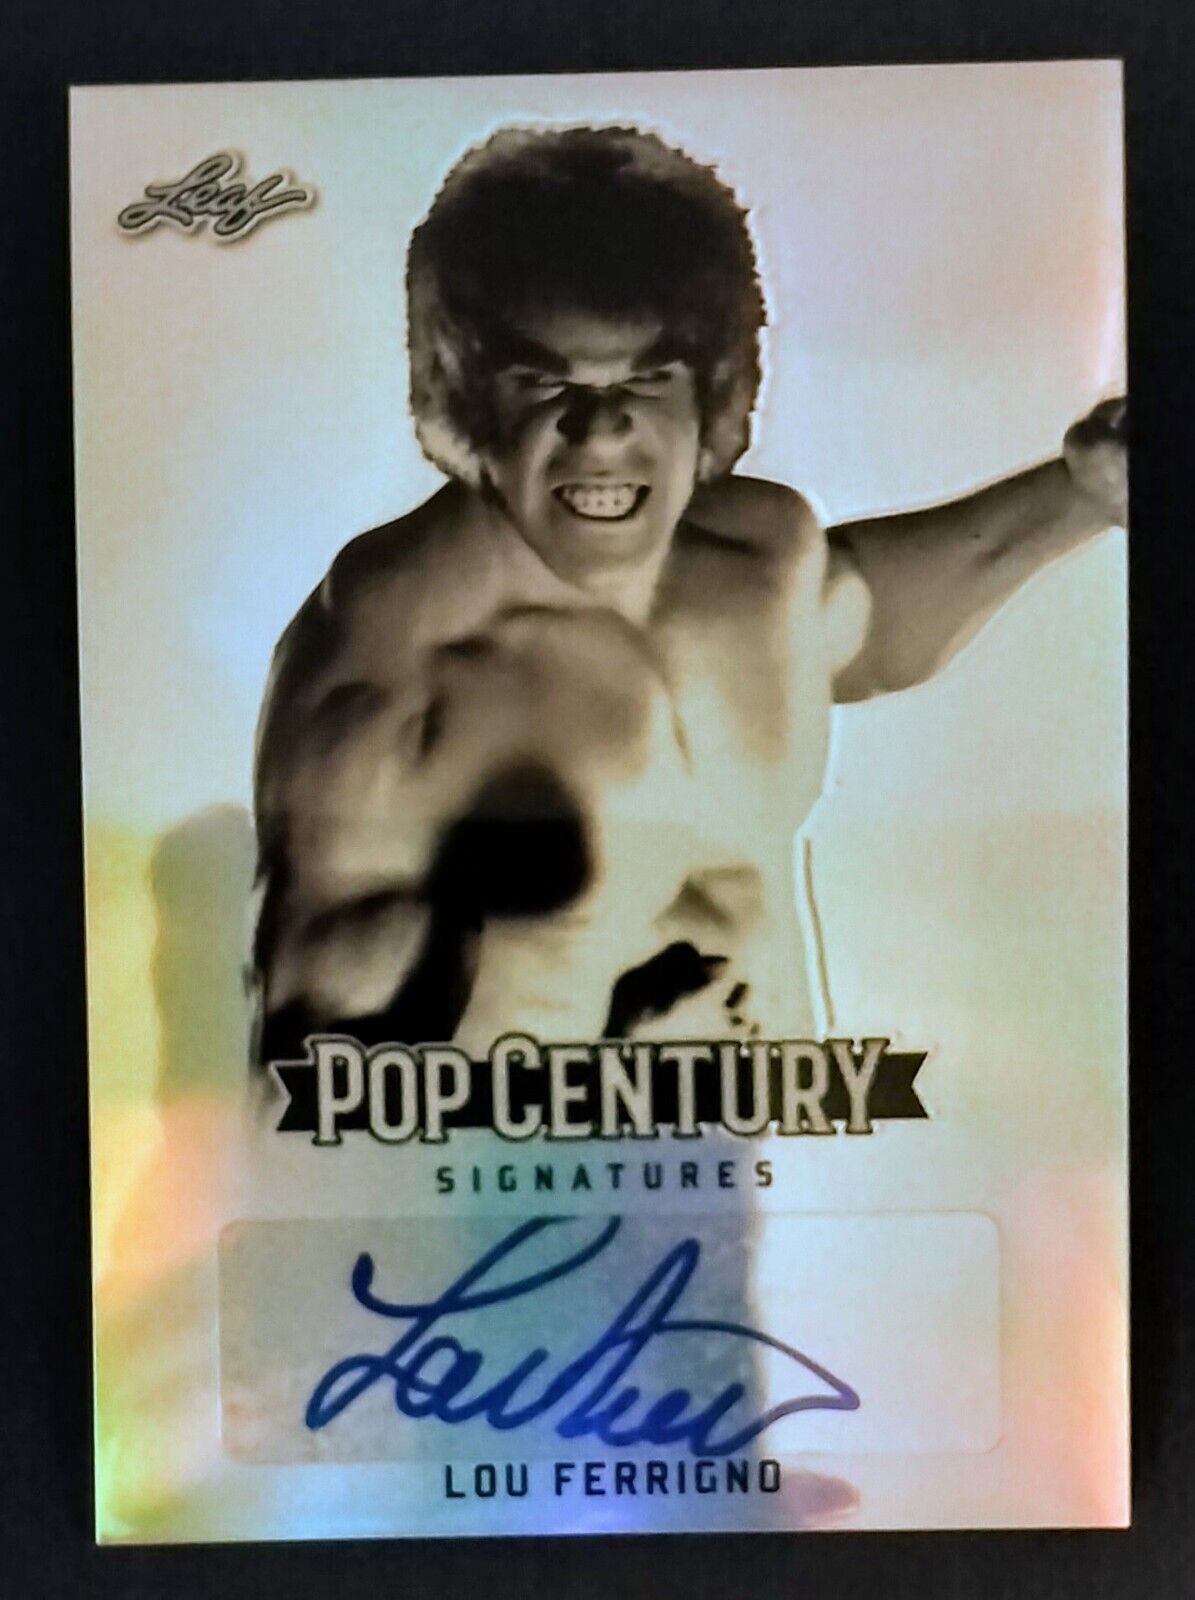 2018 Leaf Pop Century Incredible Hulk Lou Ferrigno Auto Autograph Card 